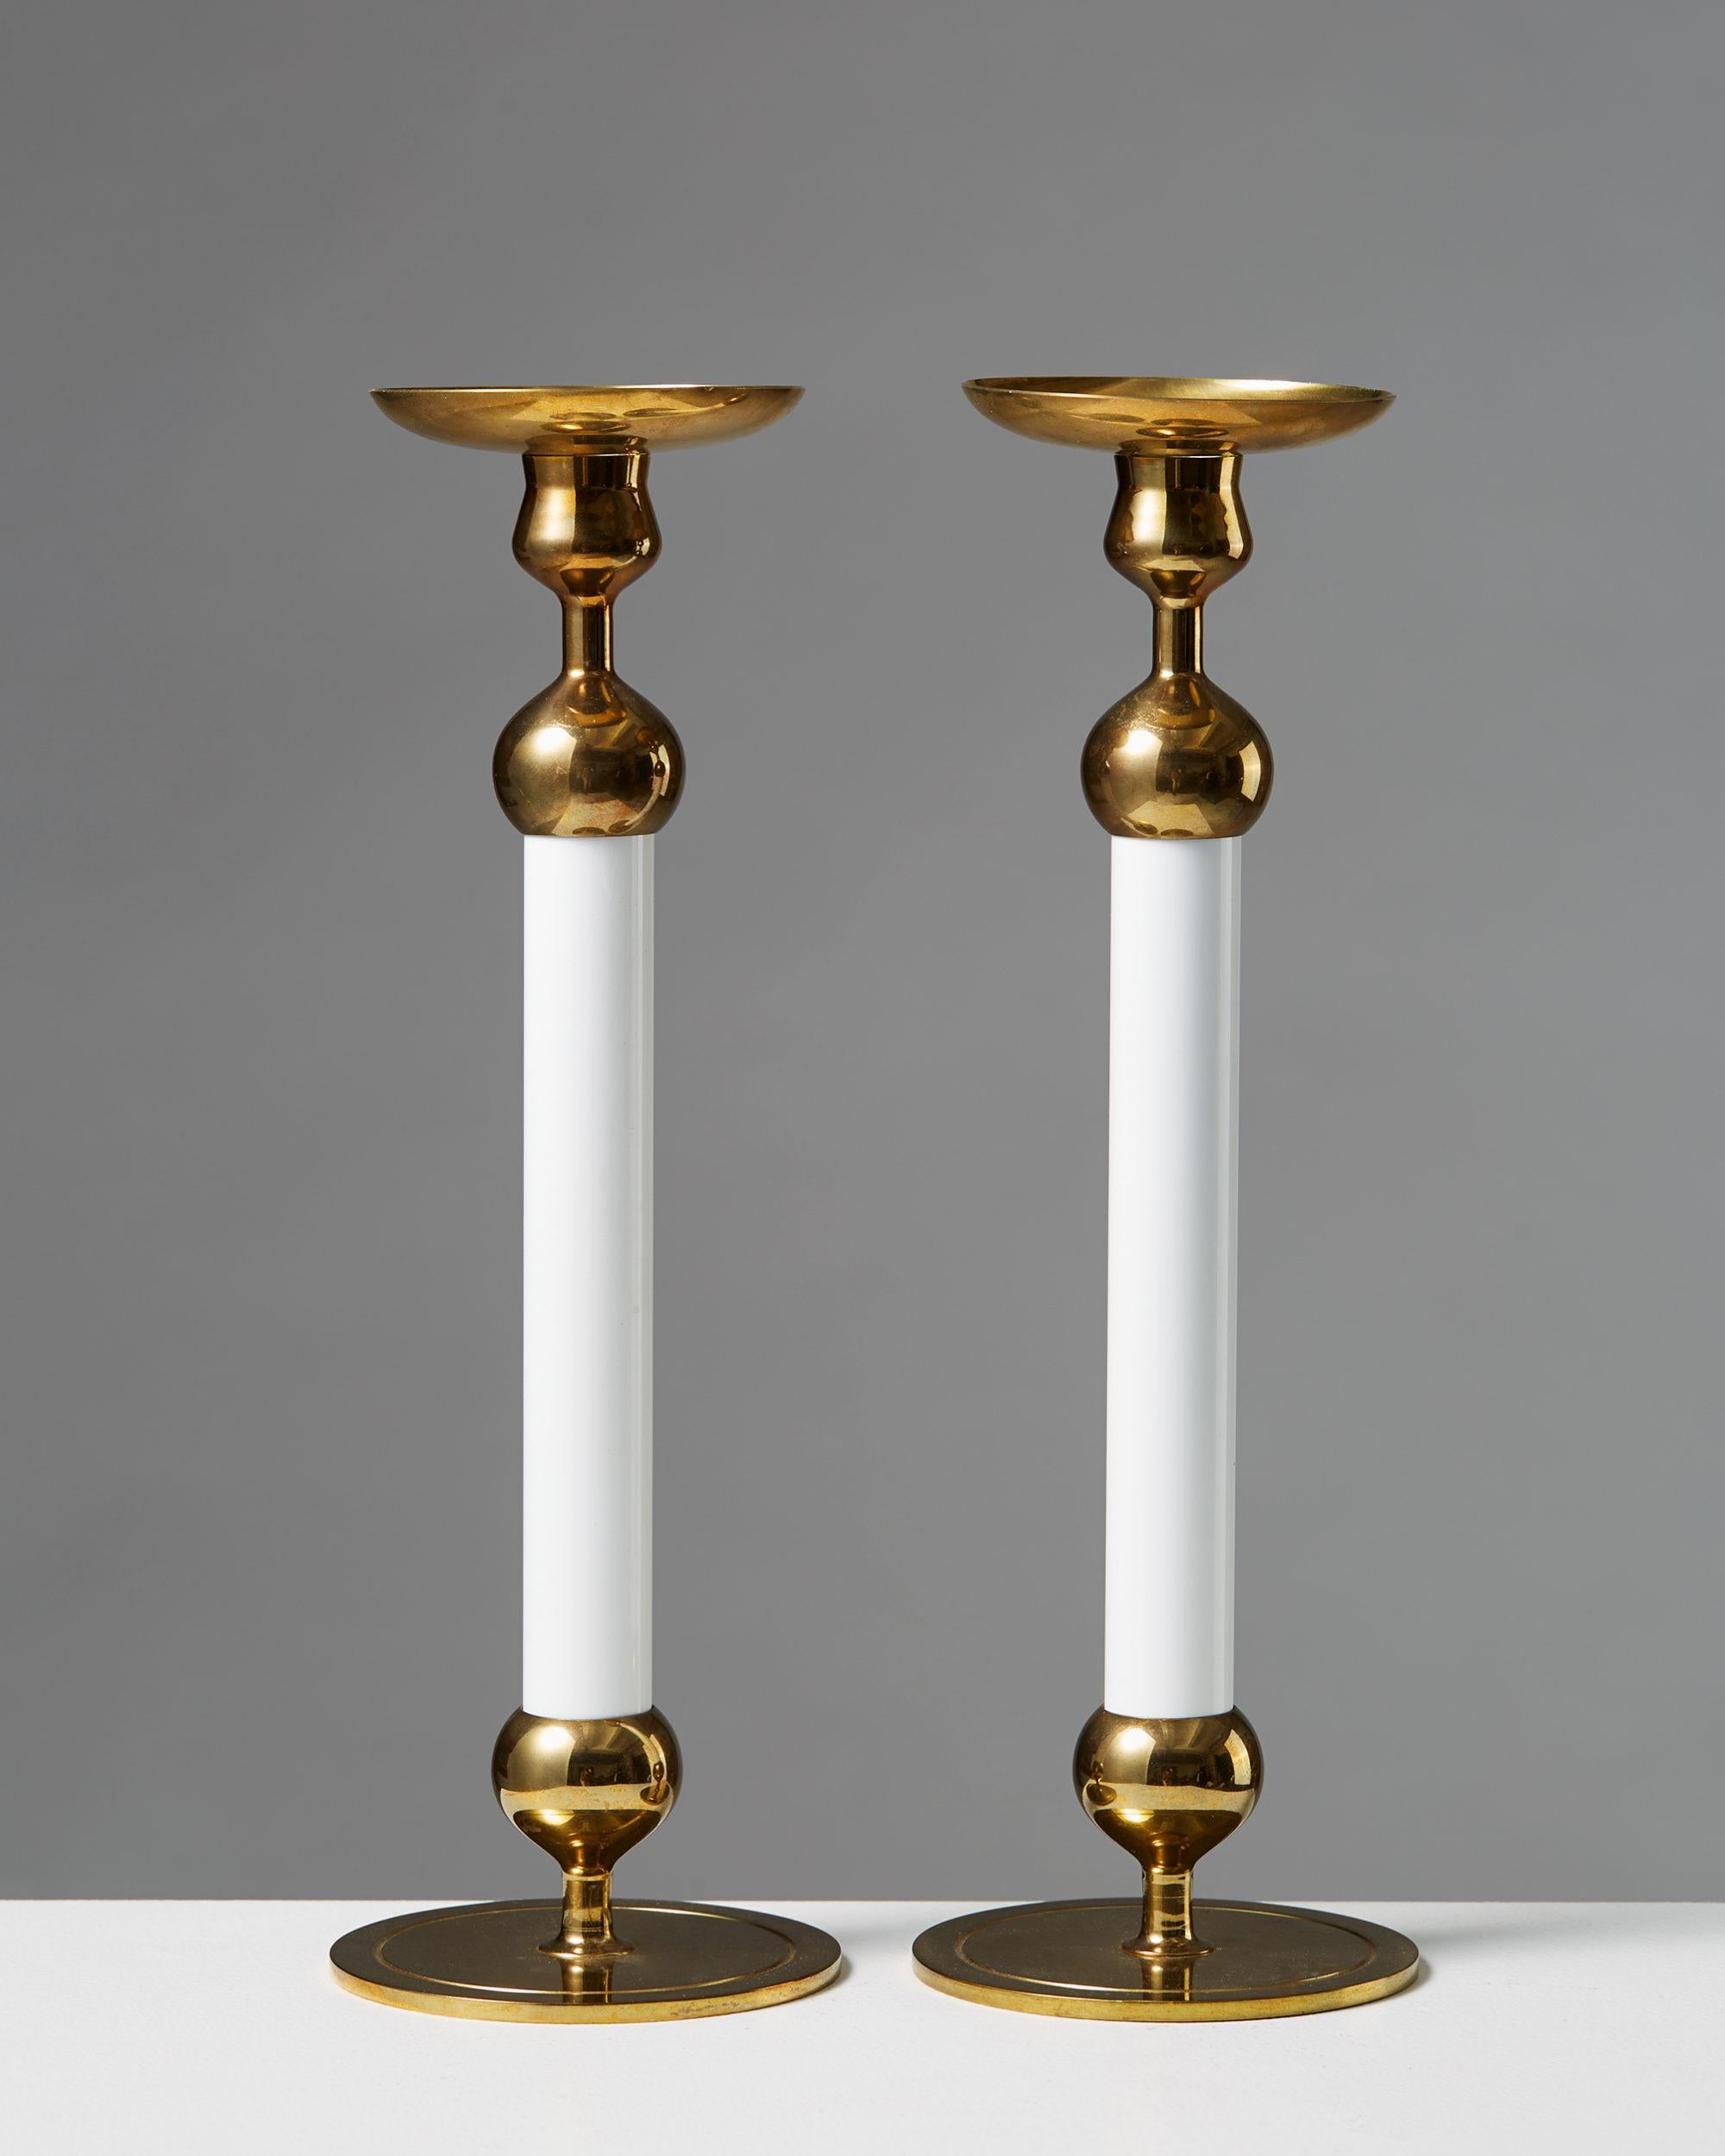 Pair of candlesticks designed by Josef Frank for Svenskt Tenn, Sweden. 1950s.
Polished brass with lacquer.

Measures: H 30 cm/ 11 7/8